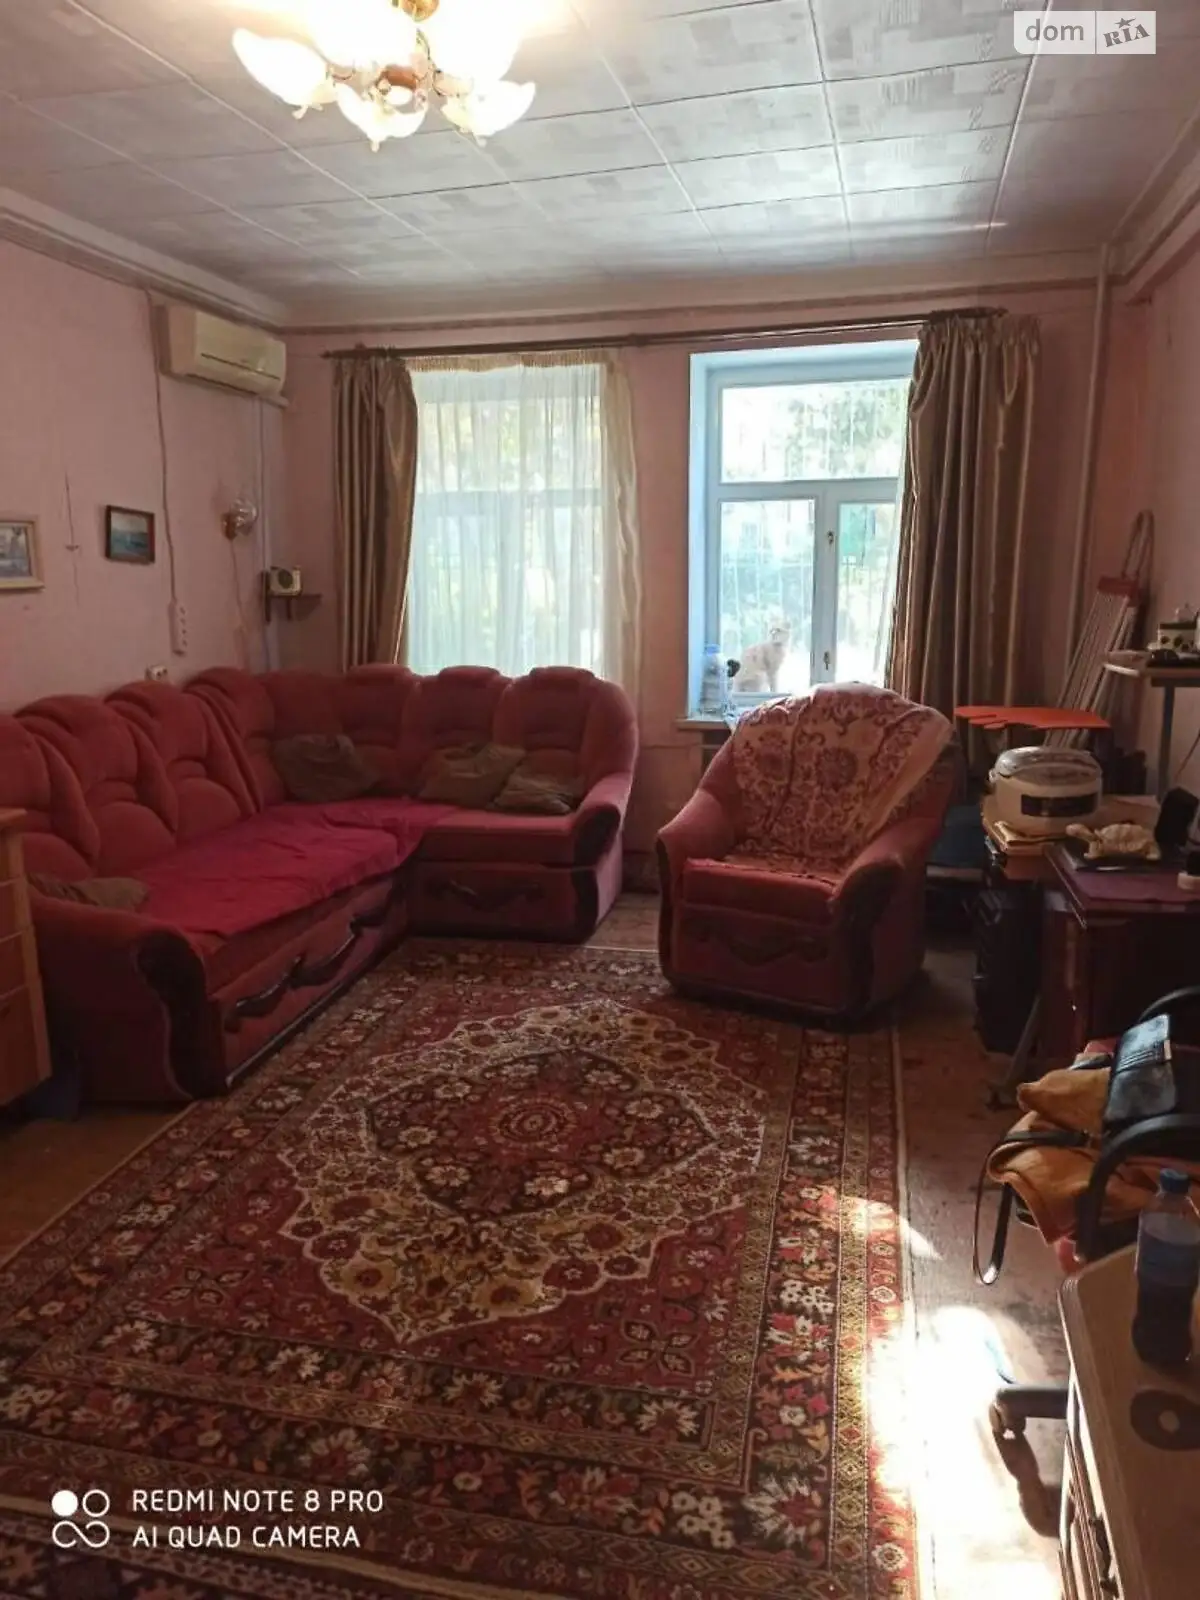 Продается комната 43 кв. м в Черноморске, цена: 17000 $ - фото 1